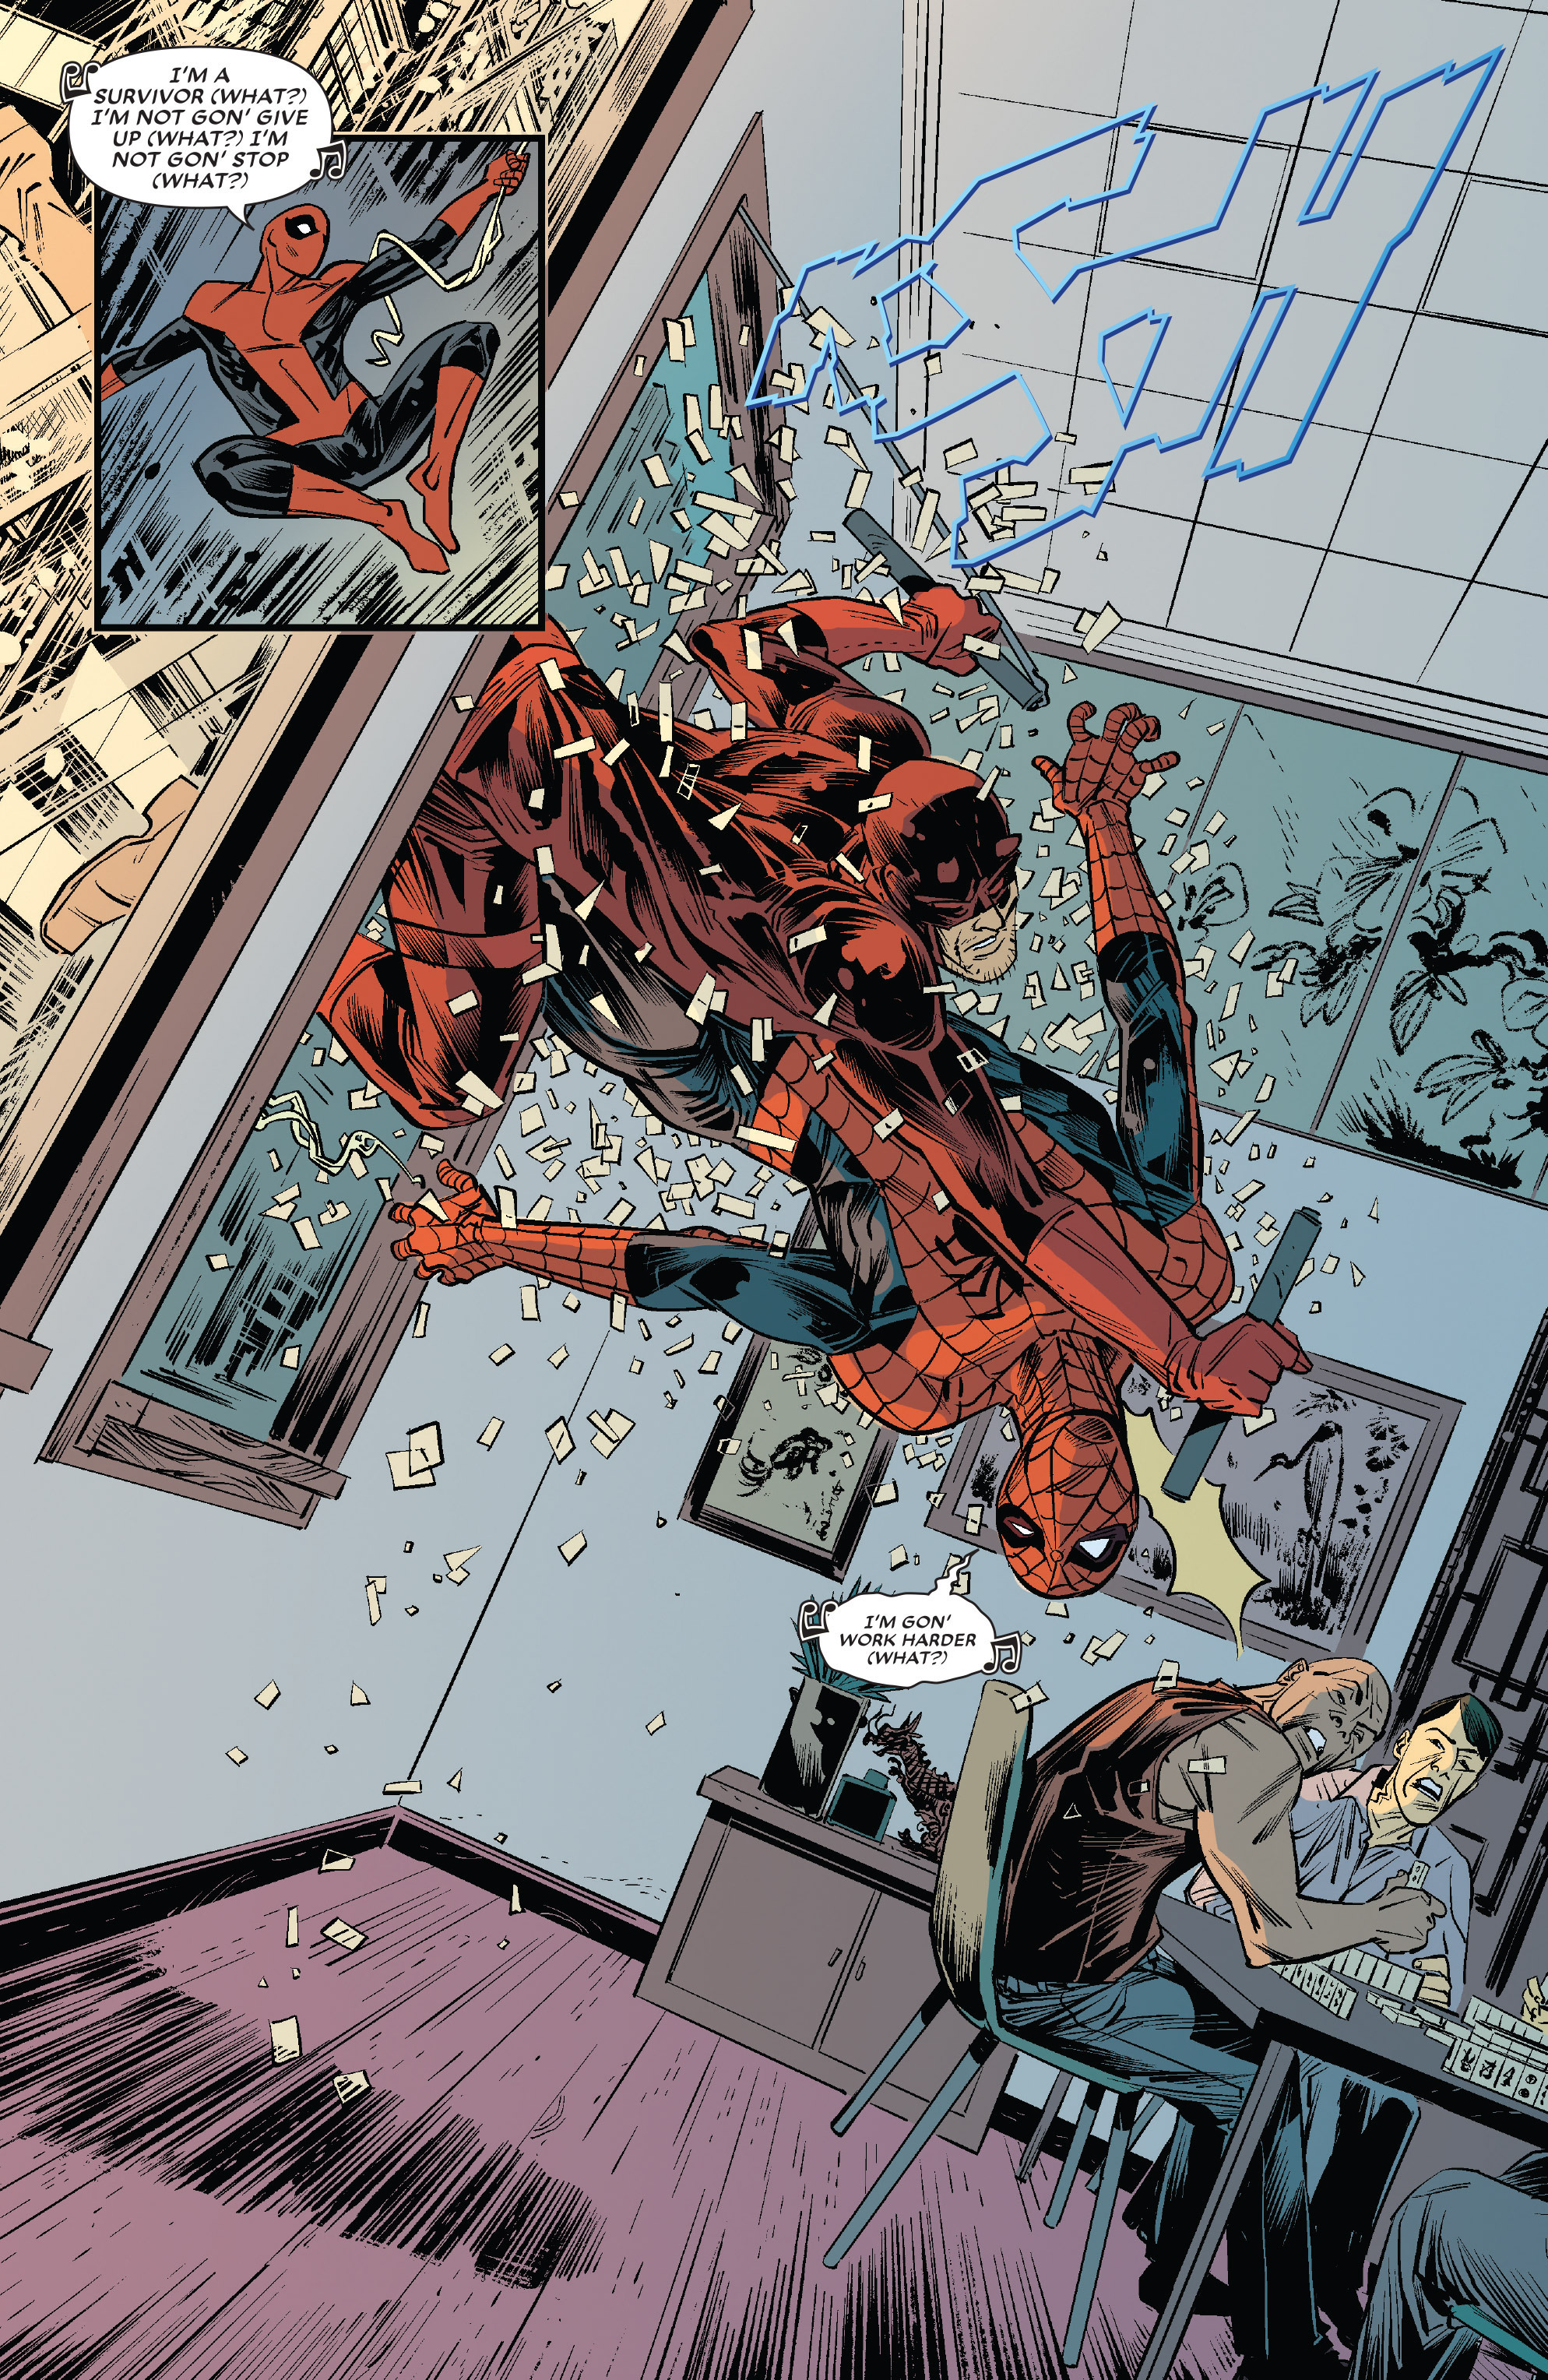 Read Online Deadpool V Gambit Comic Issue 1